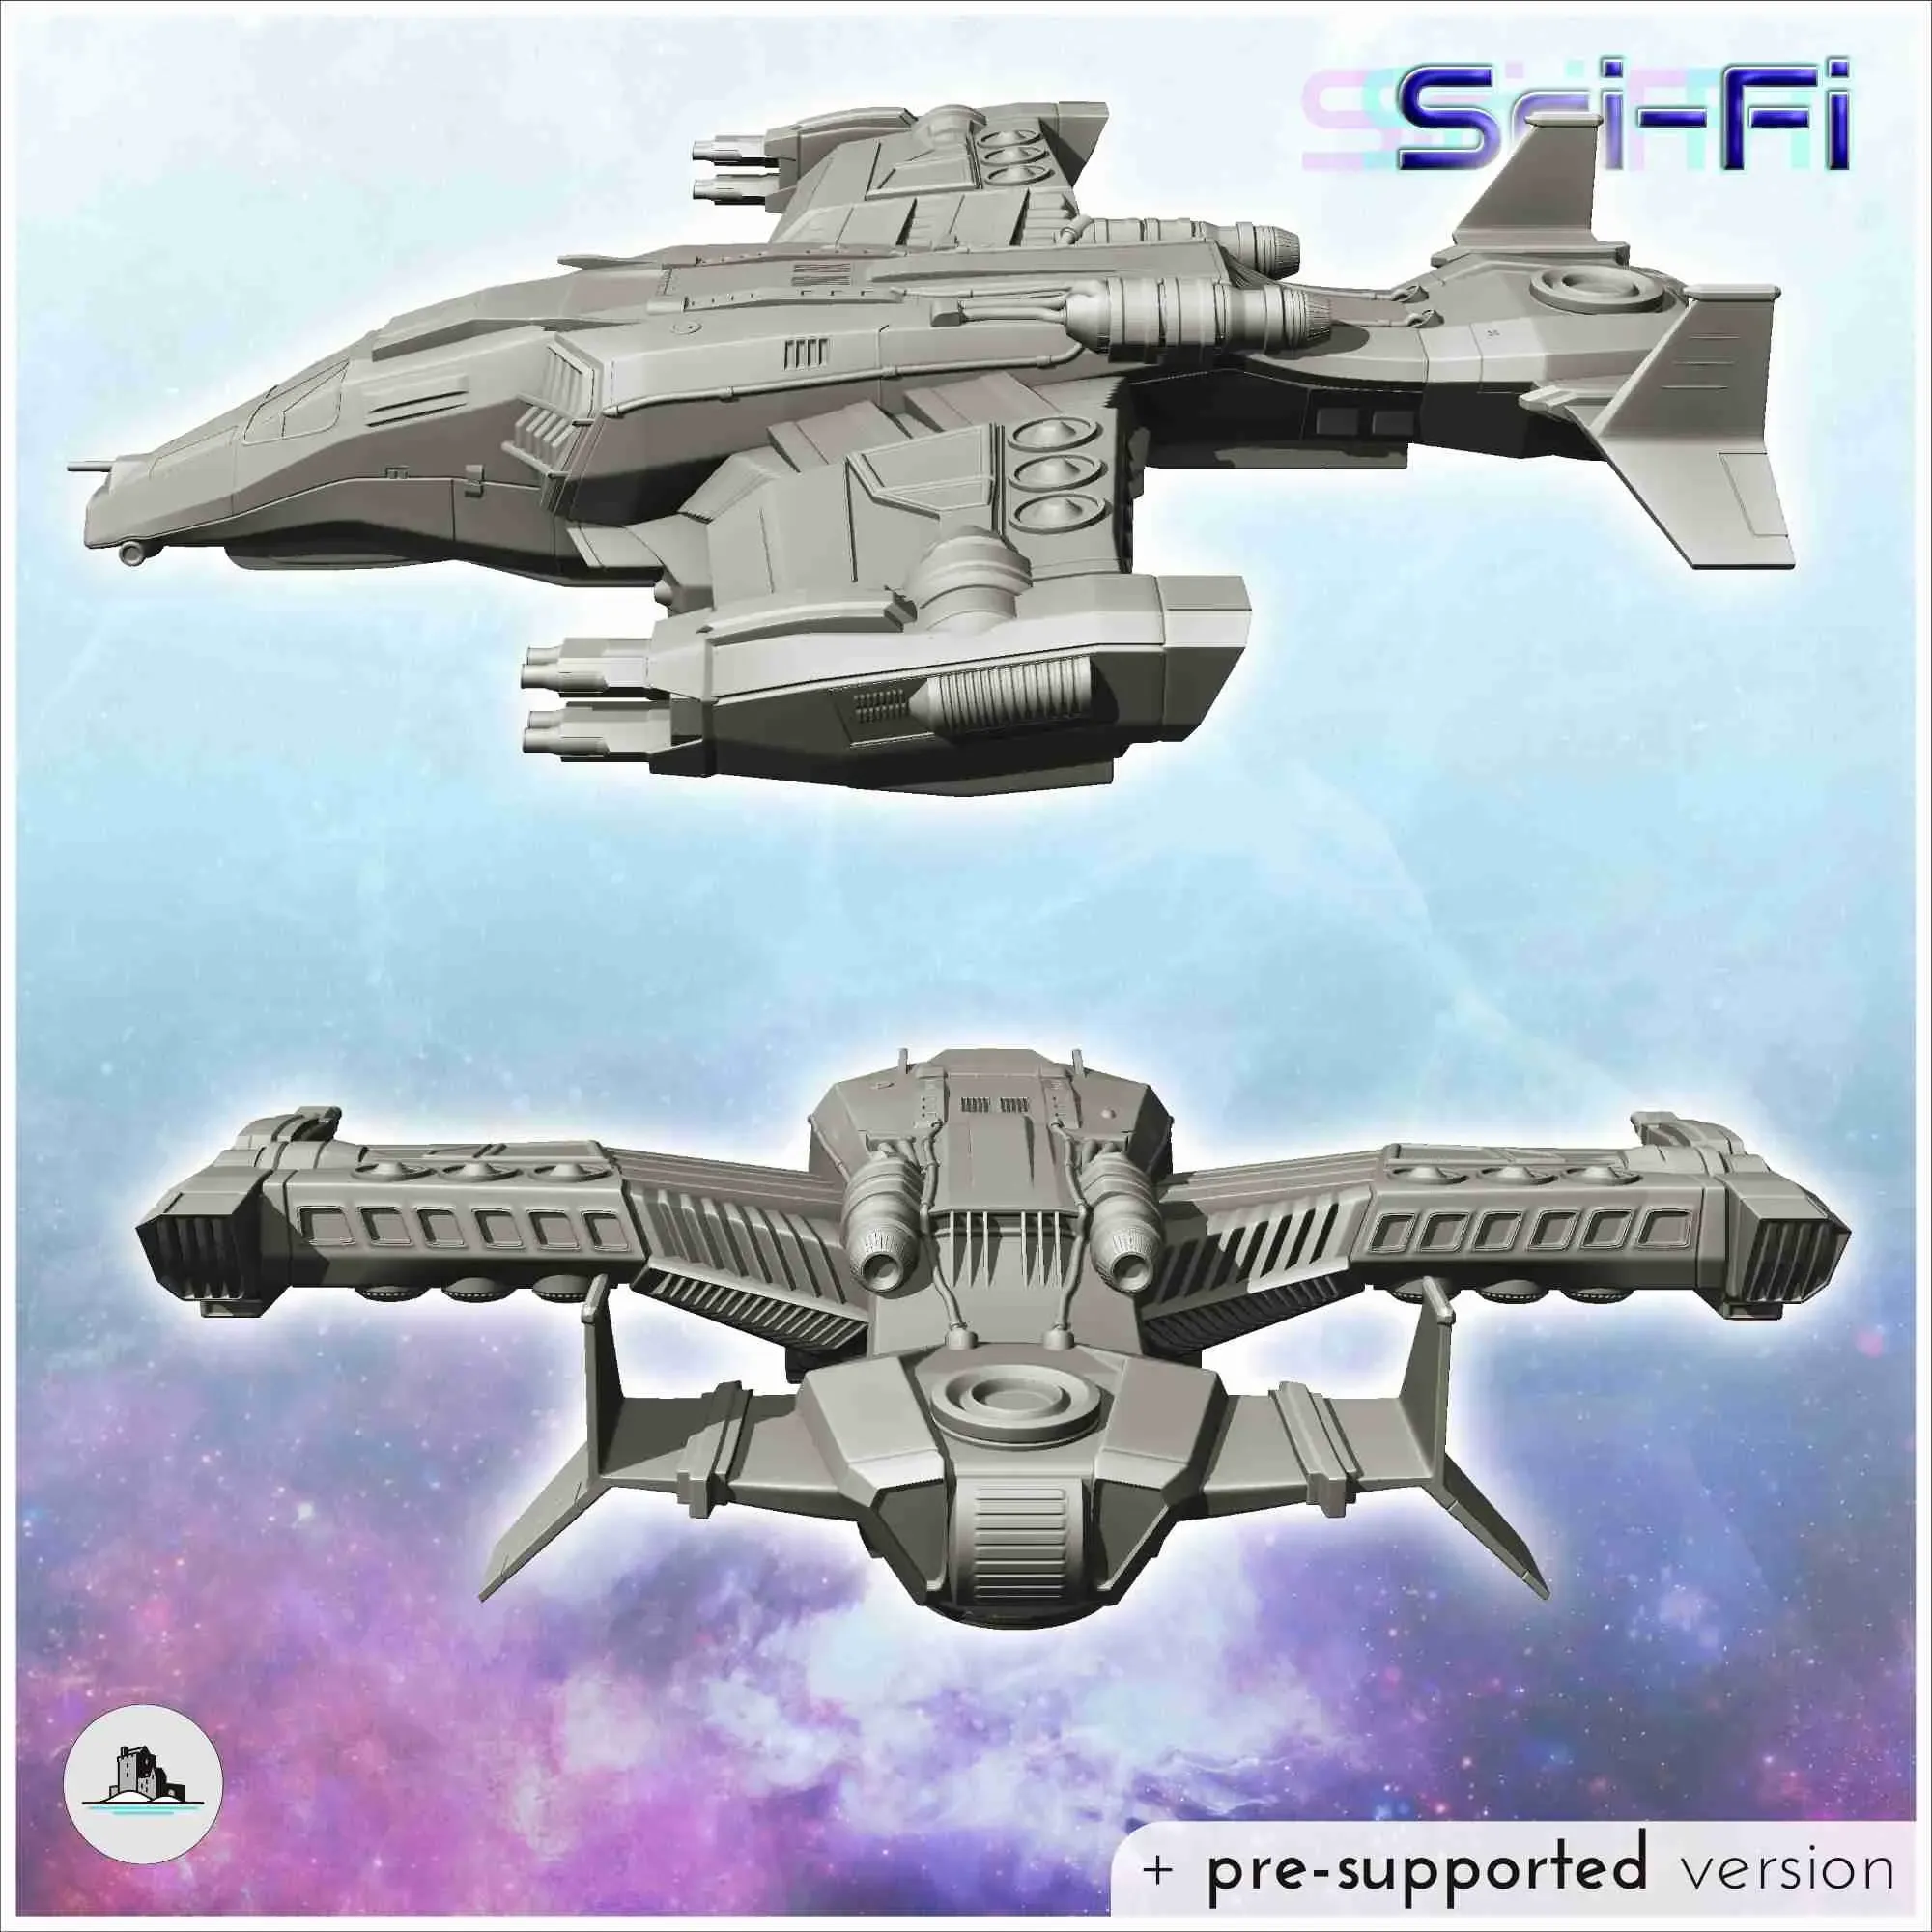 Palaemon spaceship 23 - sci-fi science fiction future 40k le